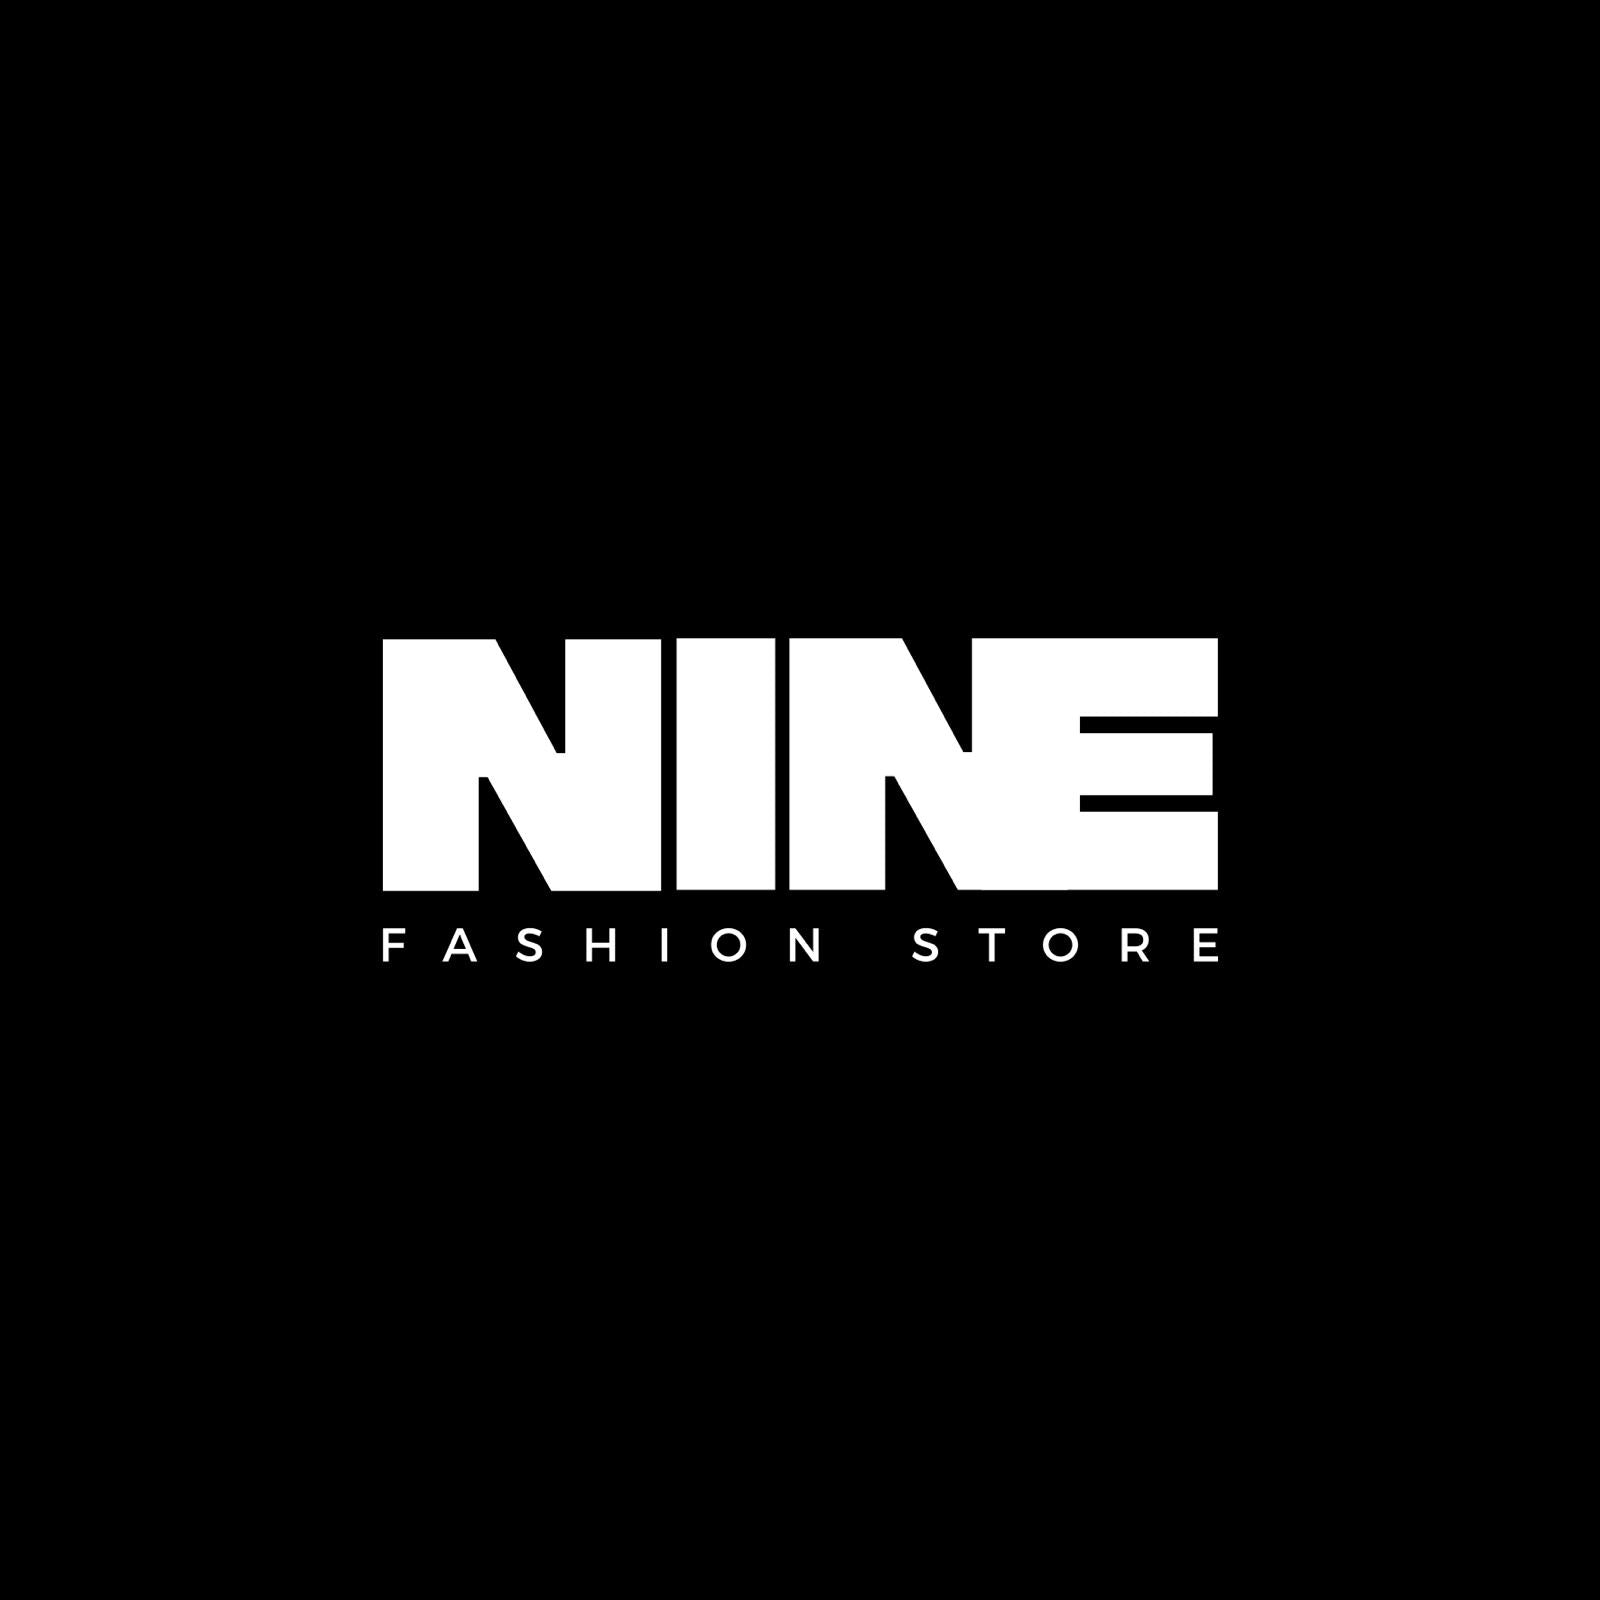 NINE Fashion Store